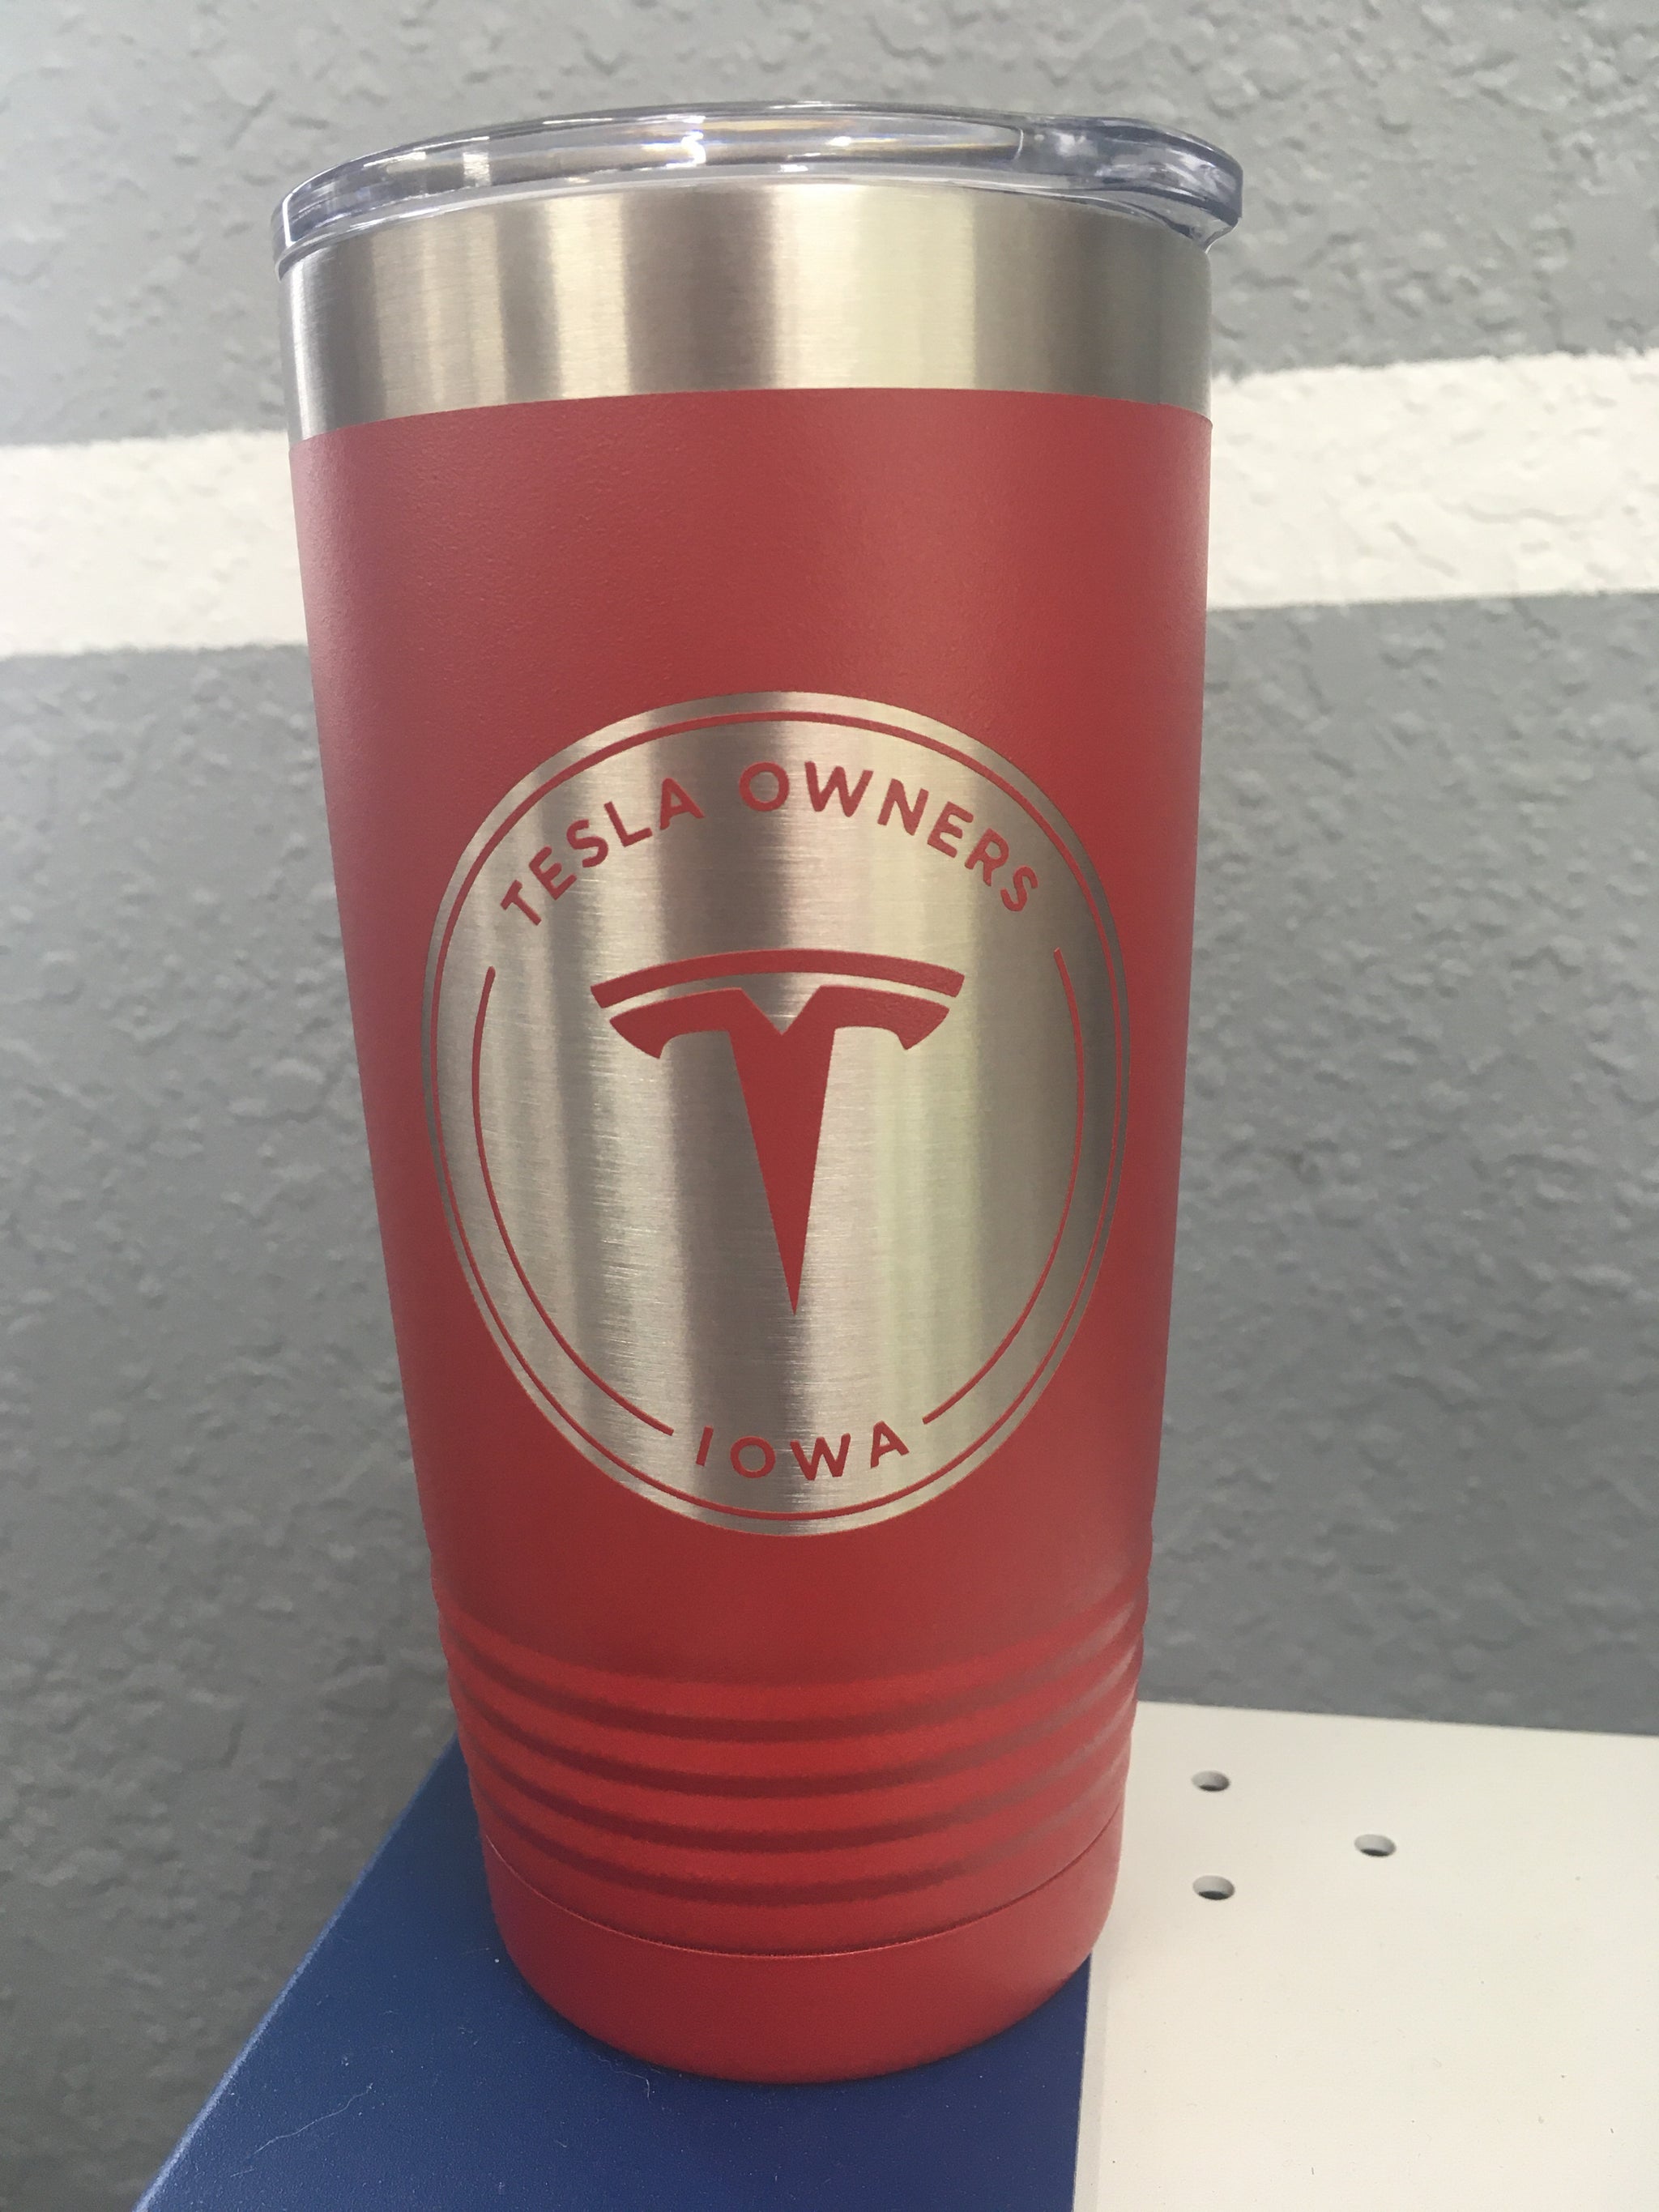 Tesla Coffee Cup Tumbler, 20 Ounces